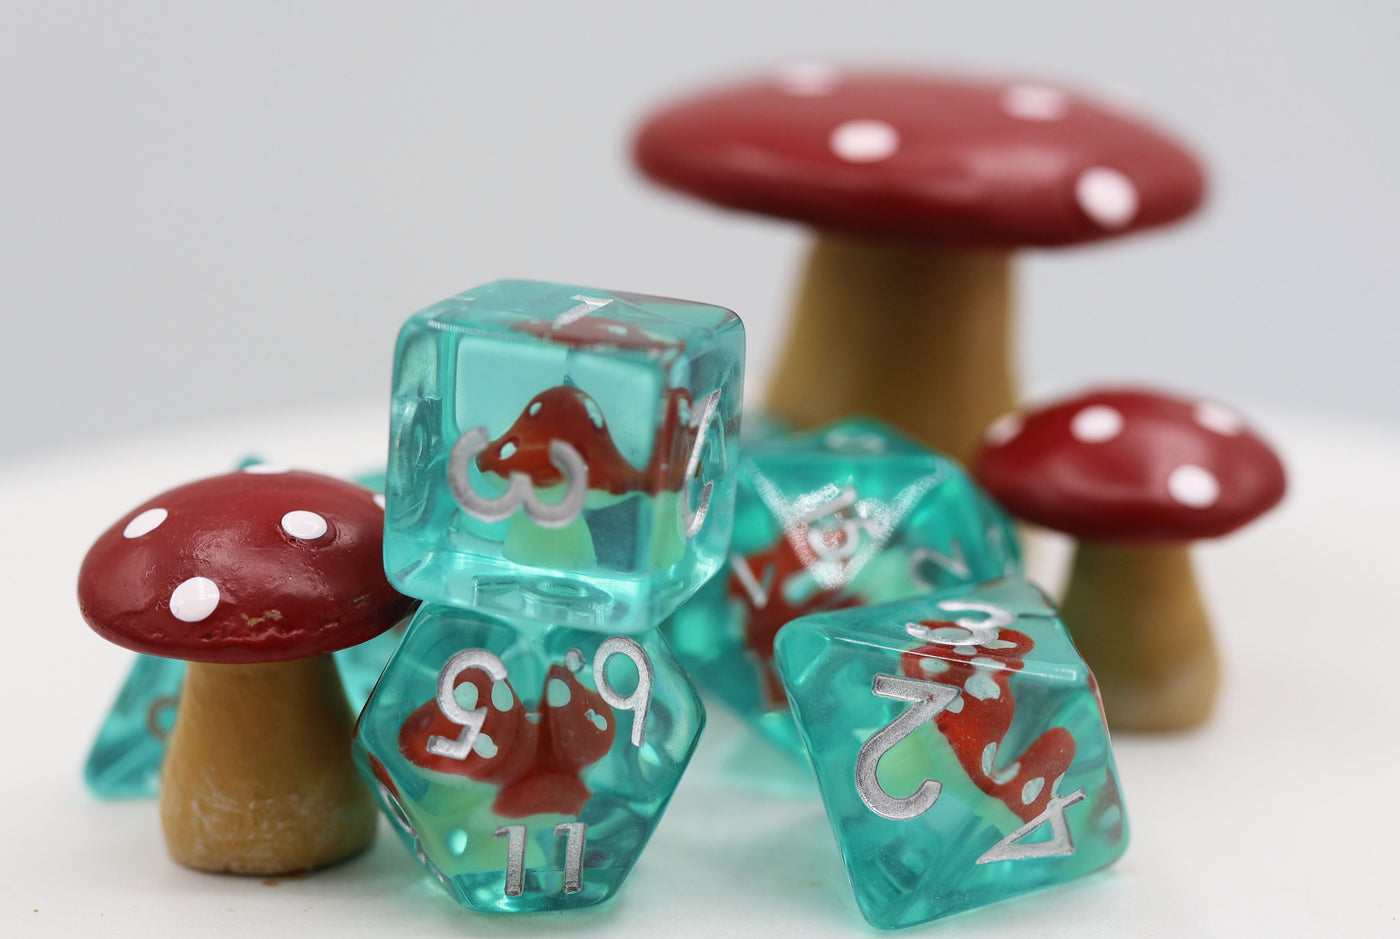 Power Up Mushroom RPG Dice Set Plastic Dice Foam Brain Games